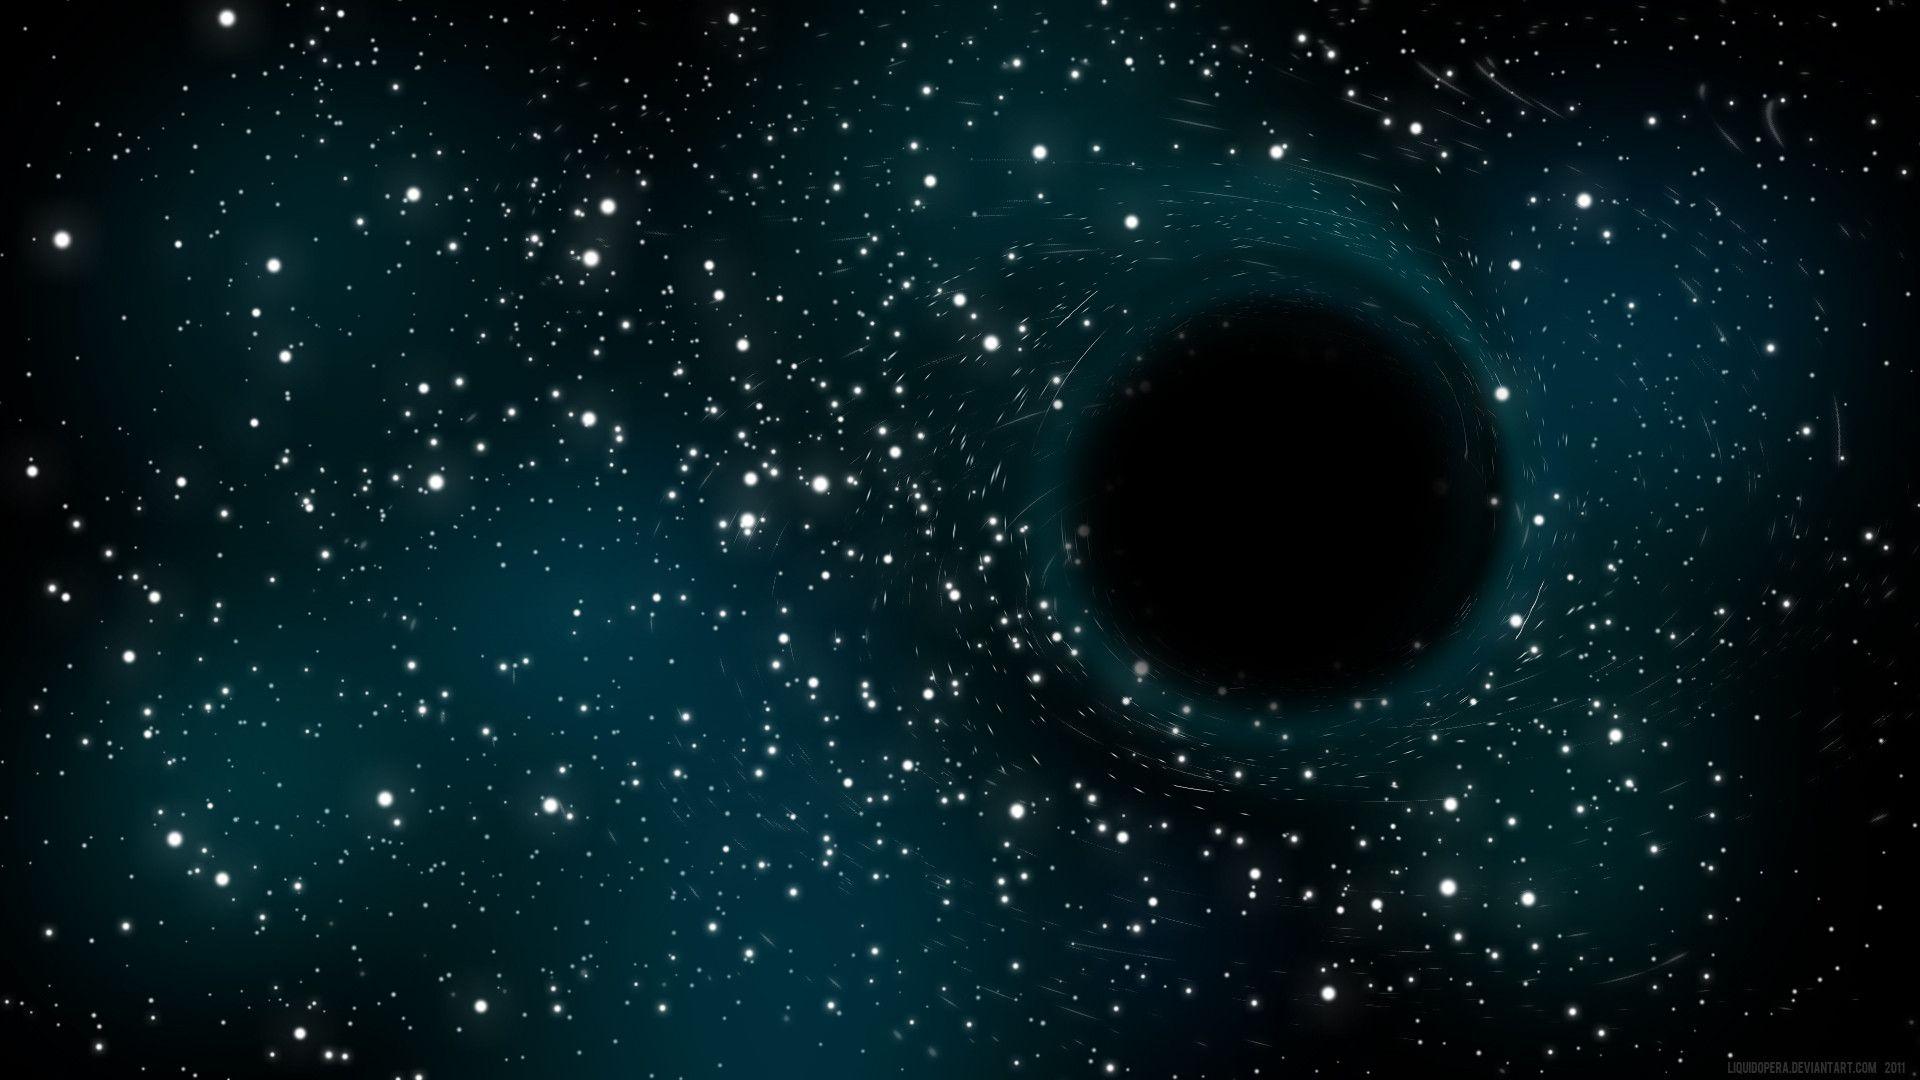 Supermassive Black Hole Wallpaper 25247 HD Wallpaper in Space